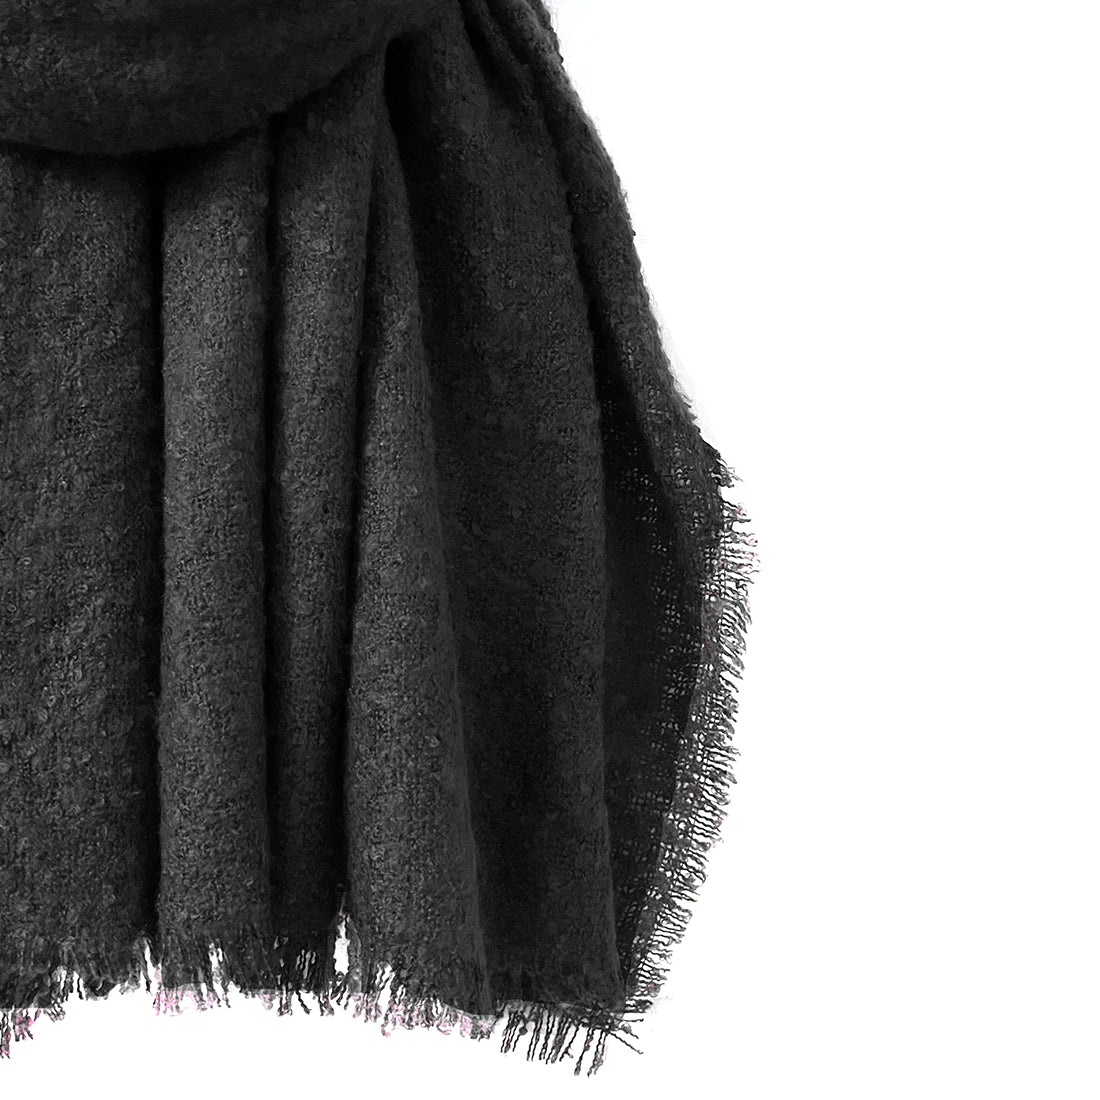 Contemporary Solid Black Thick Textured Woolen Winter Muffler Scarf